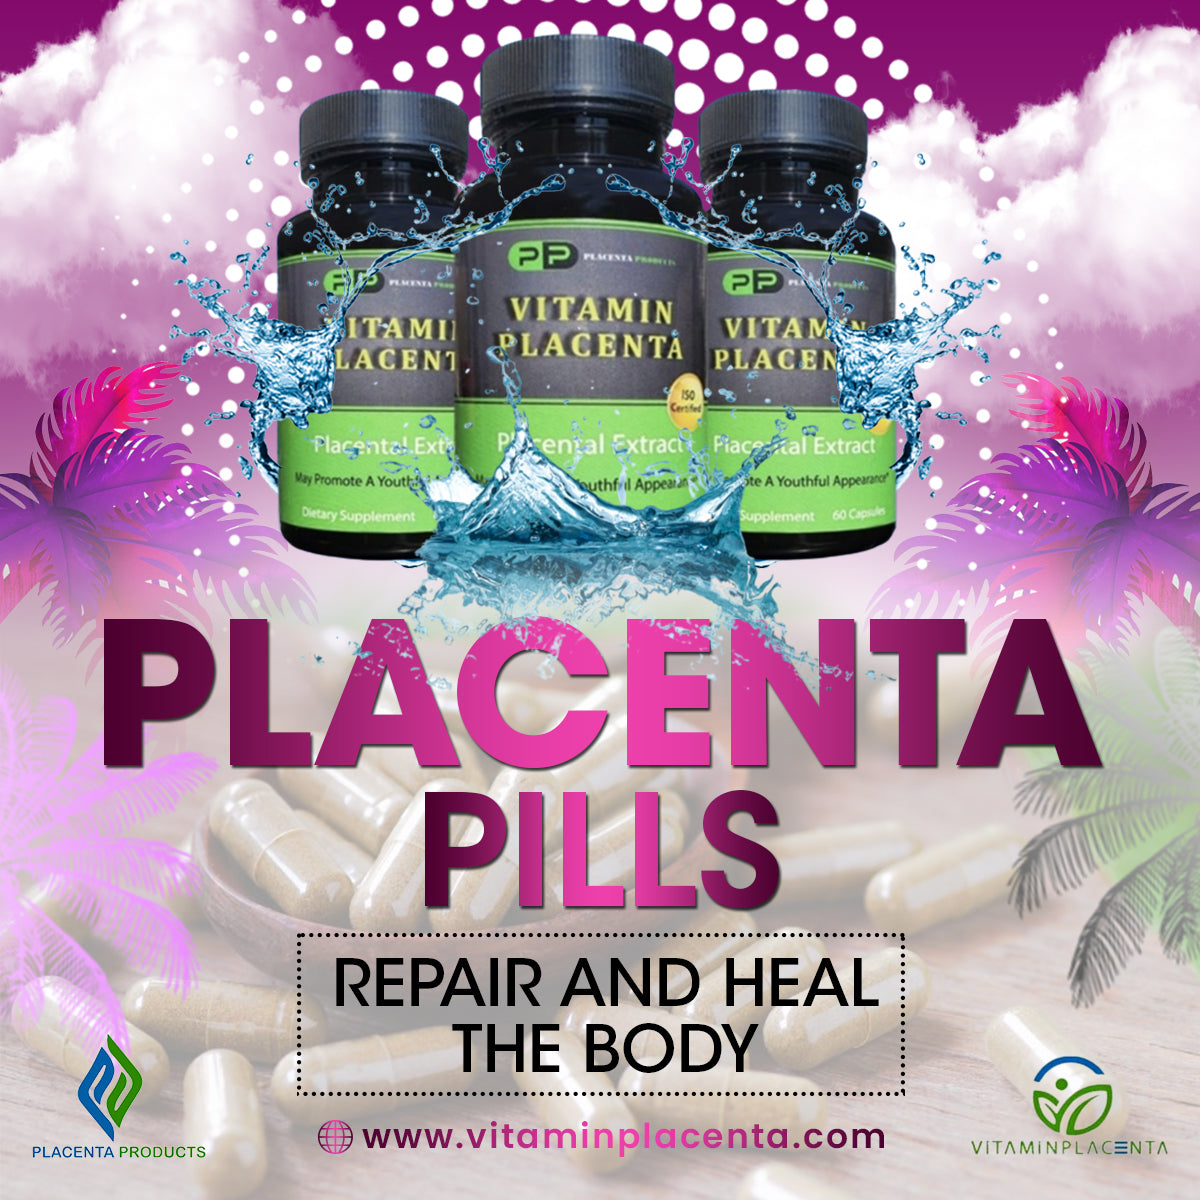 Placenta Pills Repair and Heal the Body